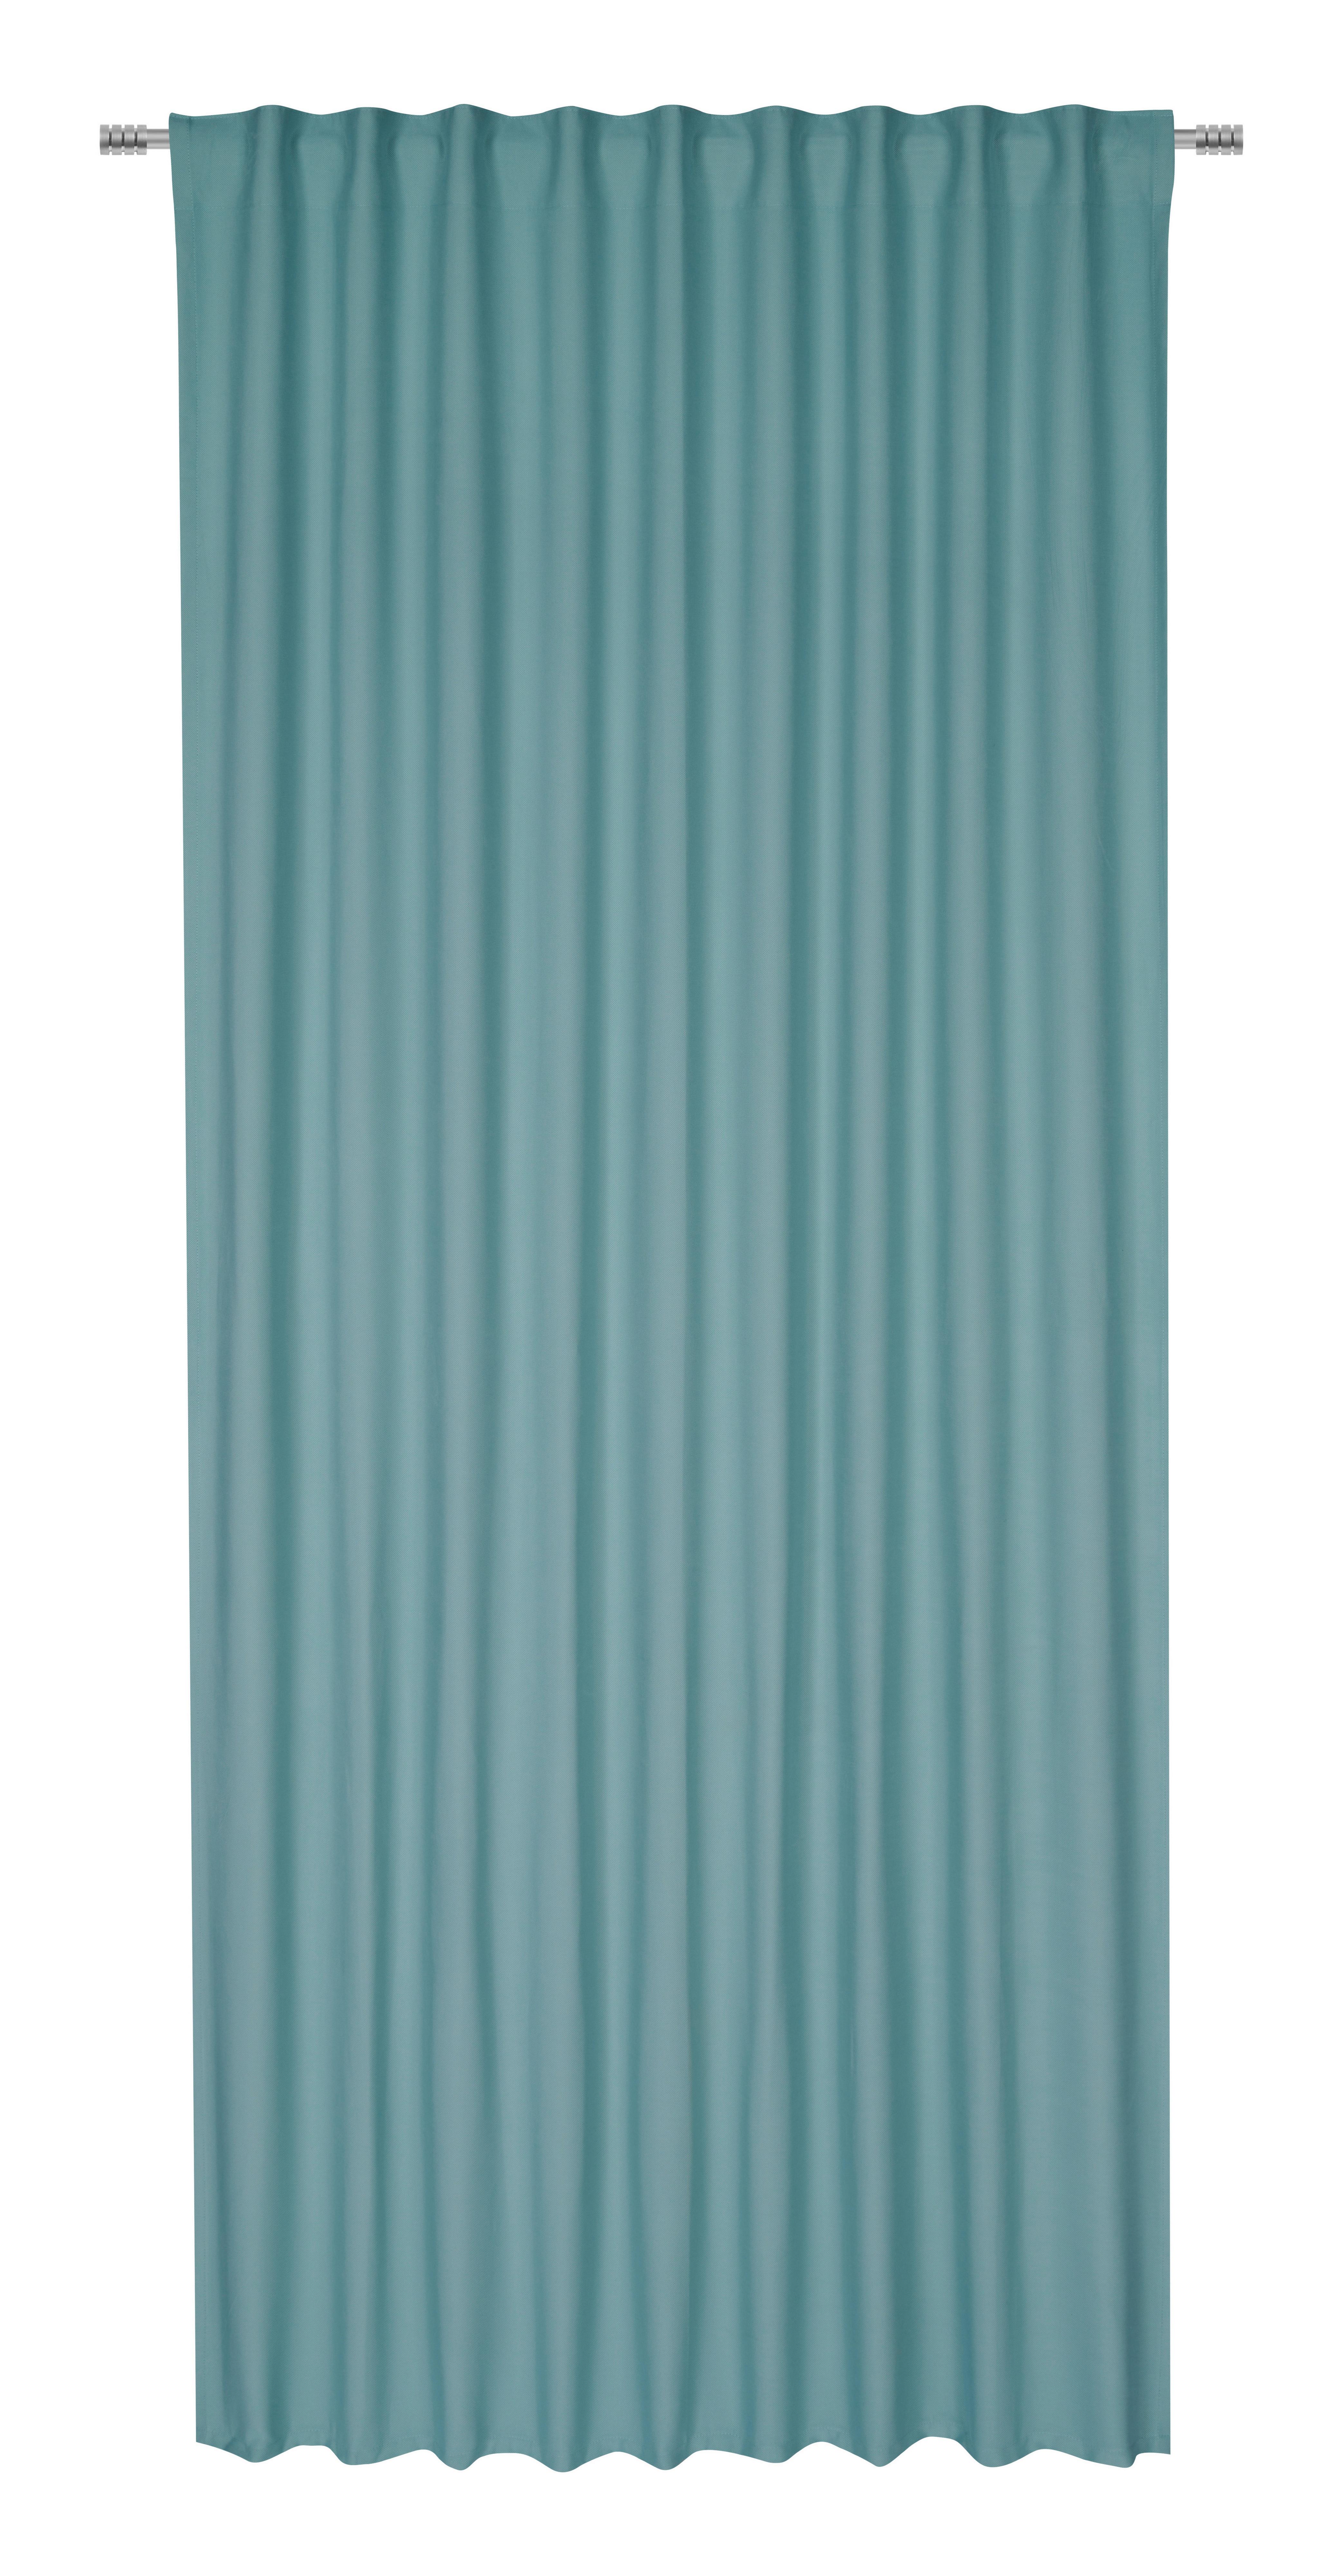 Fertigvorhang Felix in Blau ca. 135x245cm - Blau, KONVENTIONELL, Textil (135/245cm) - Modern Living